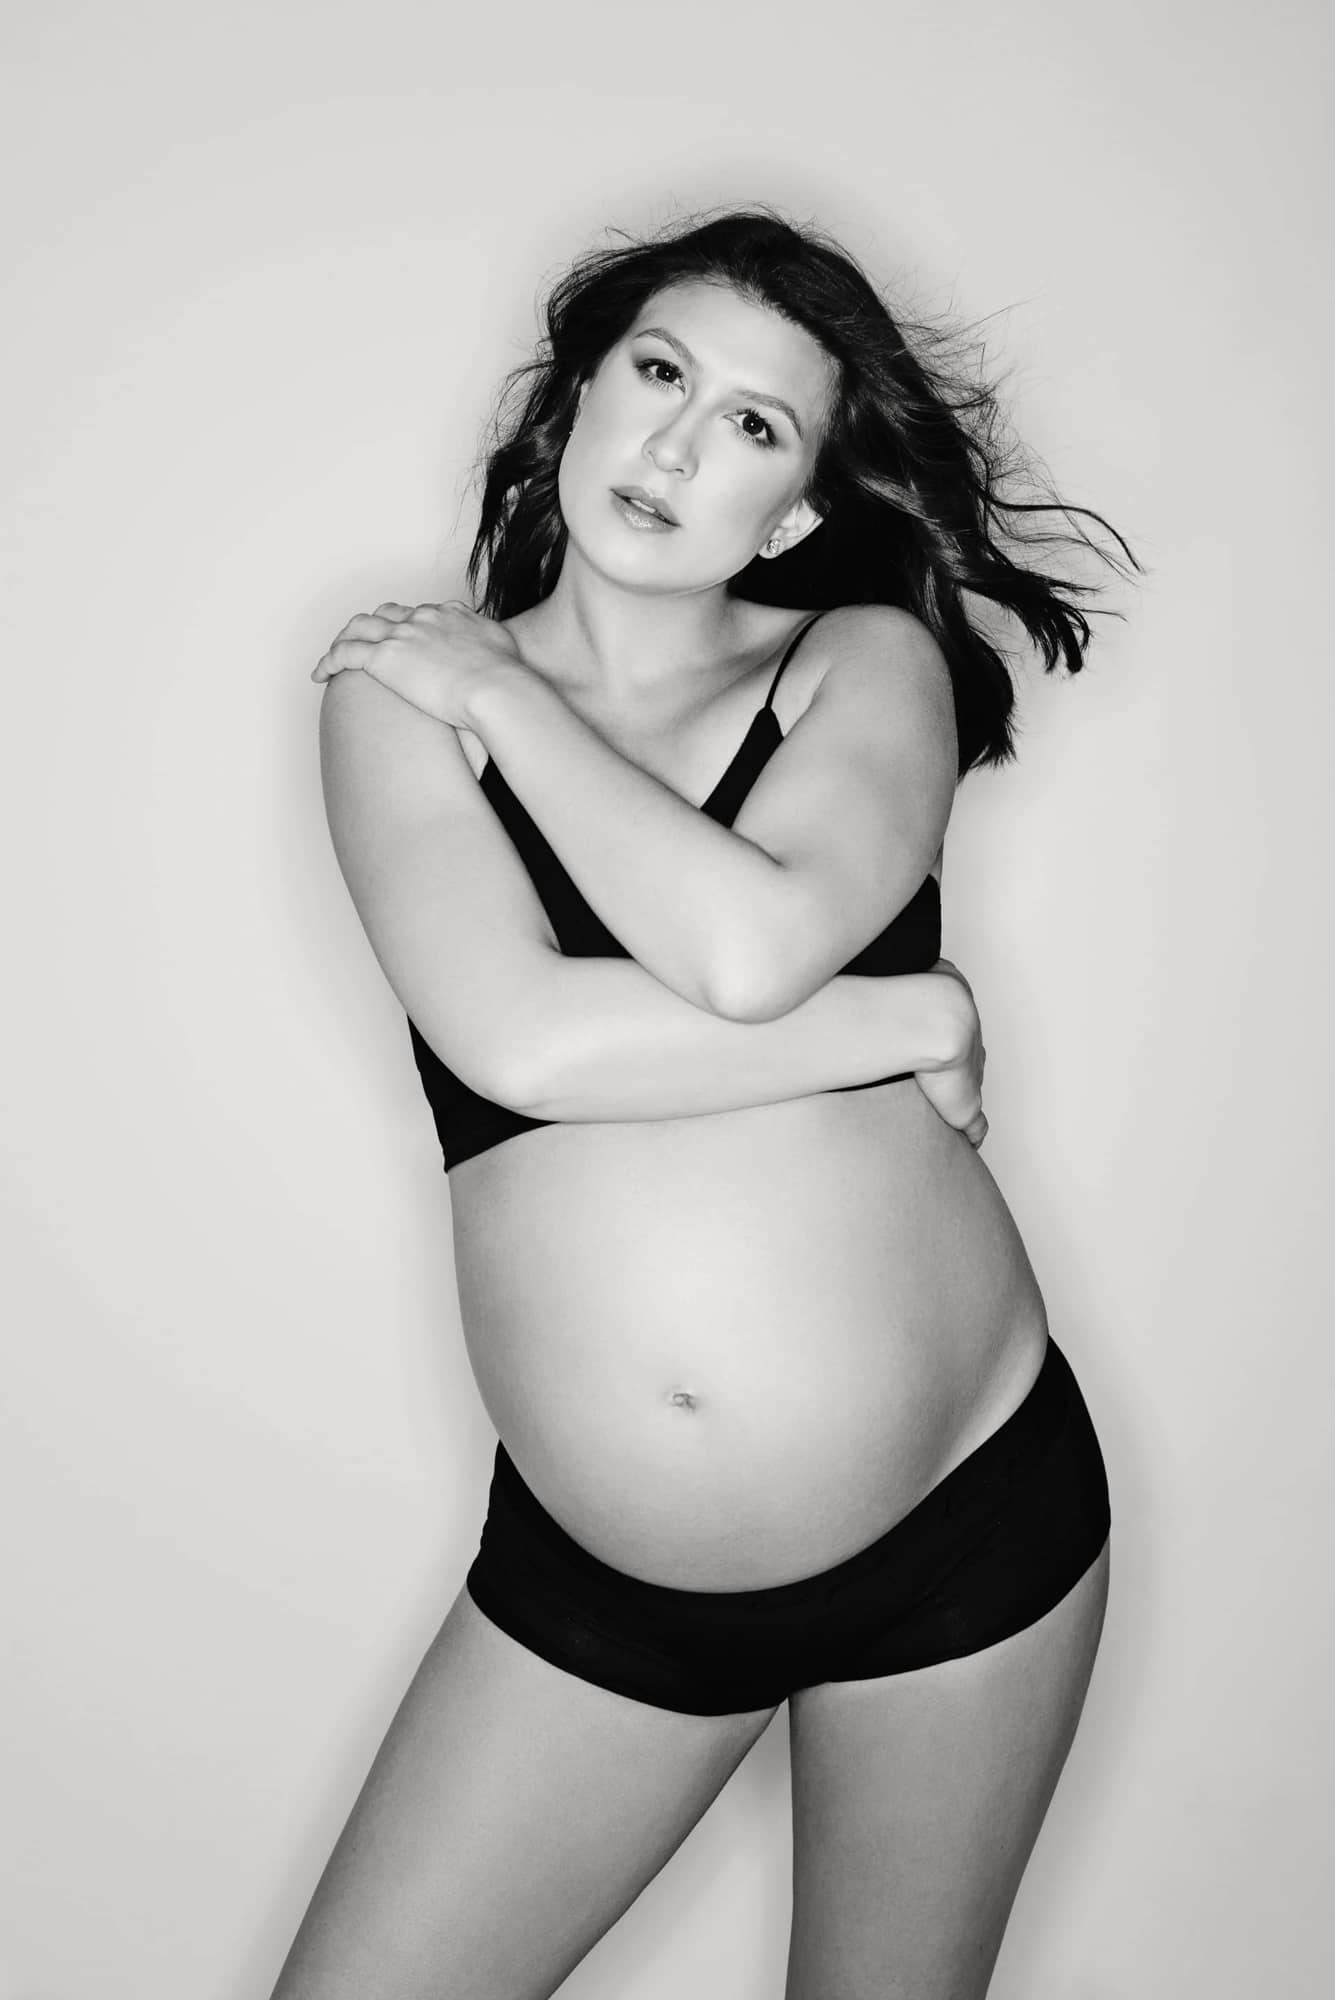 A boudoir maternity photo of a woman in black underwear.